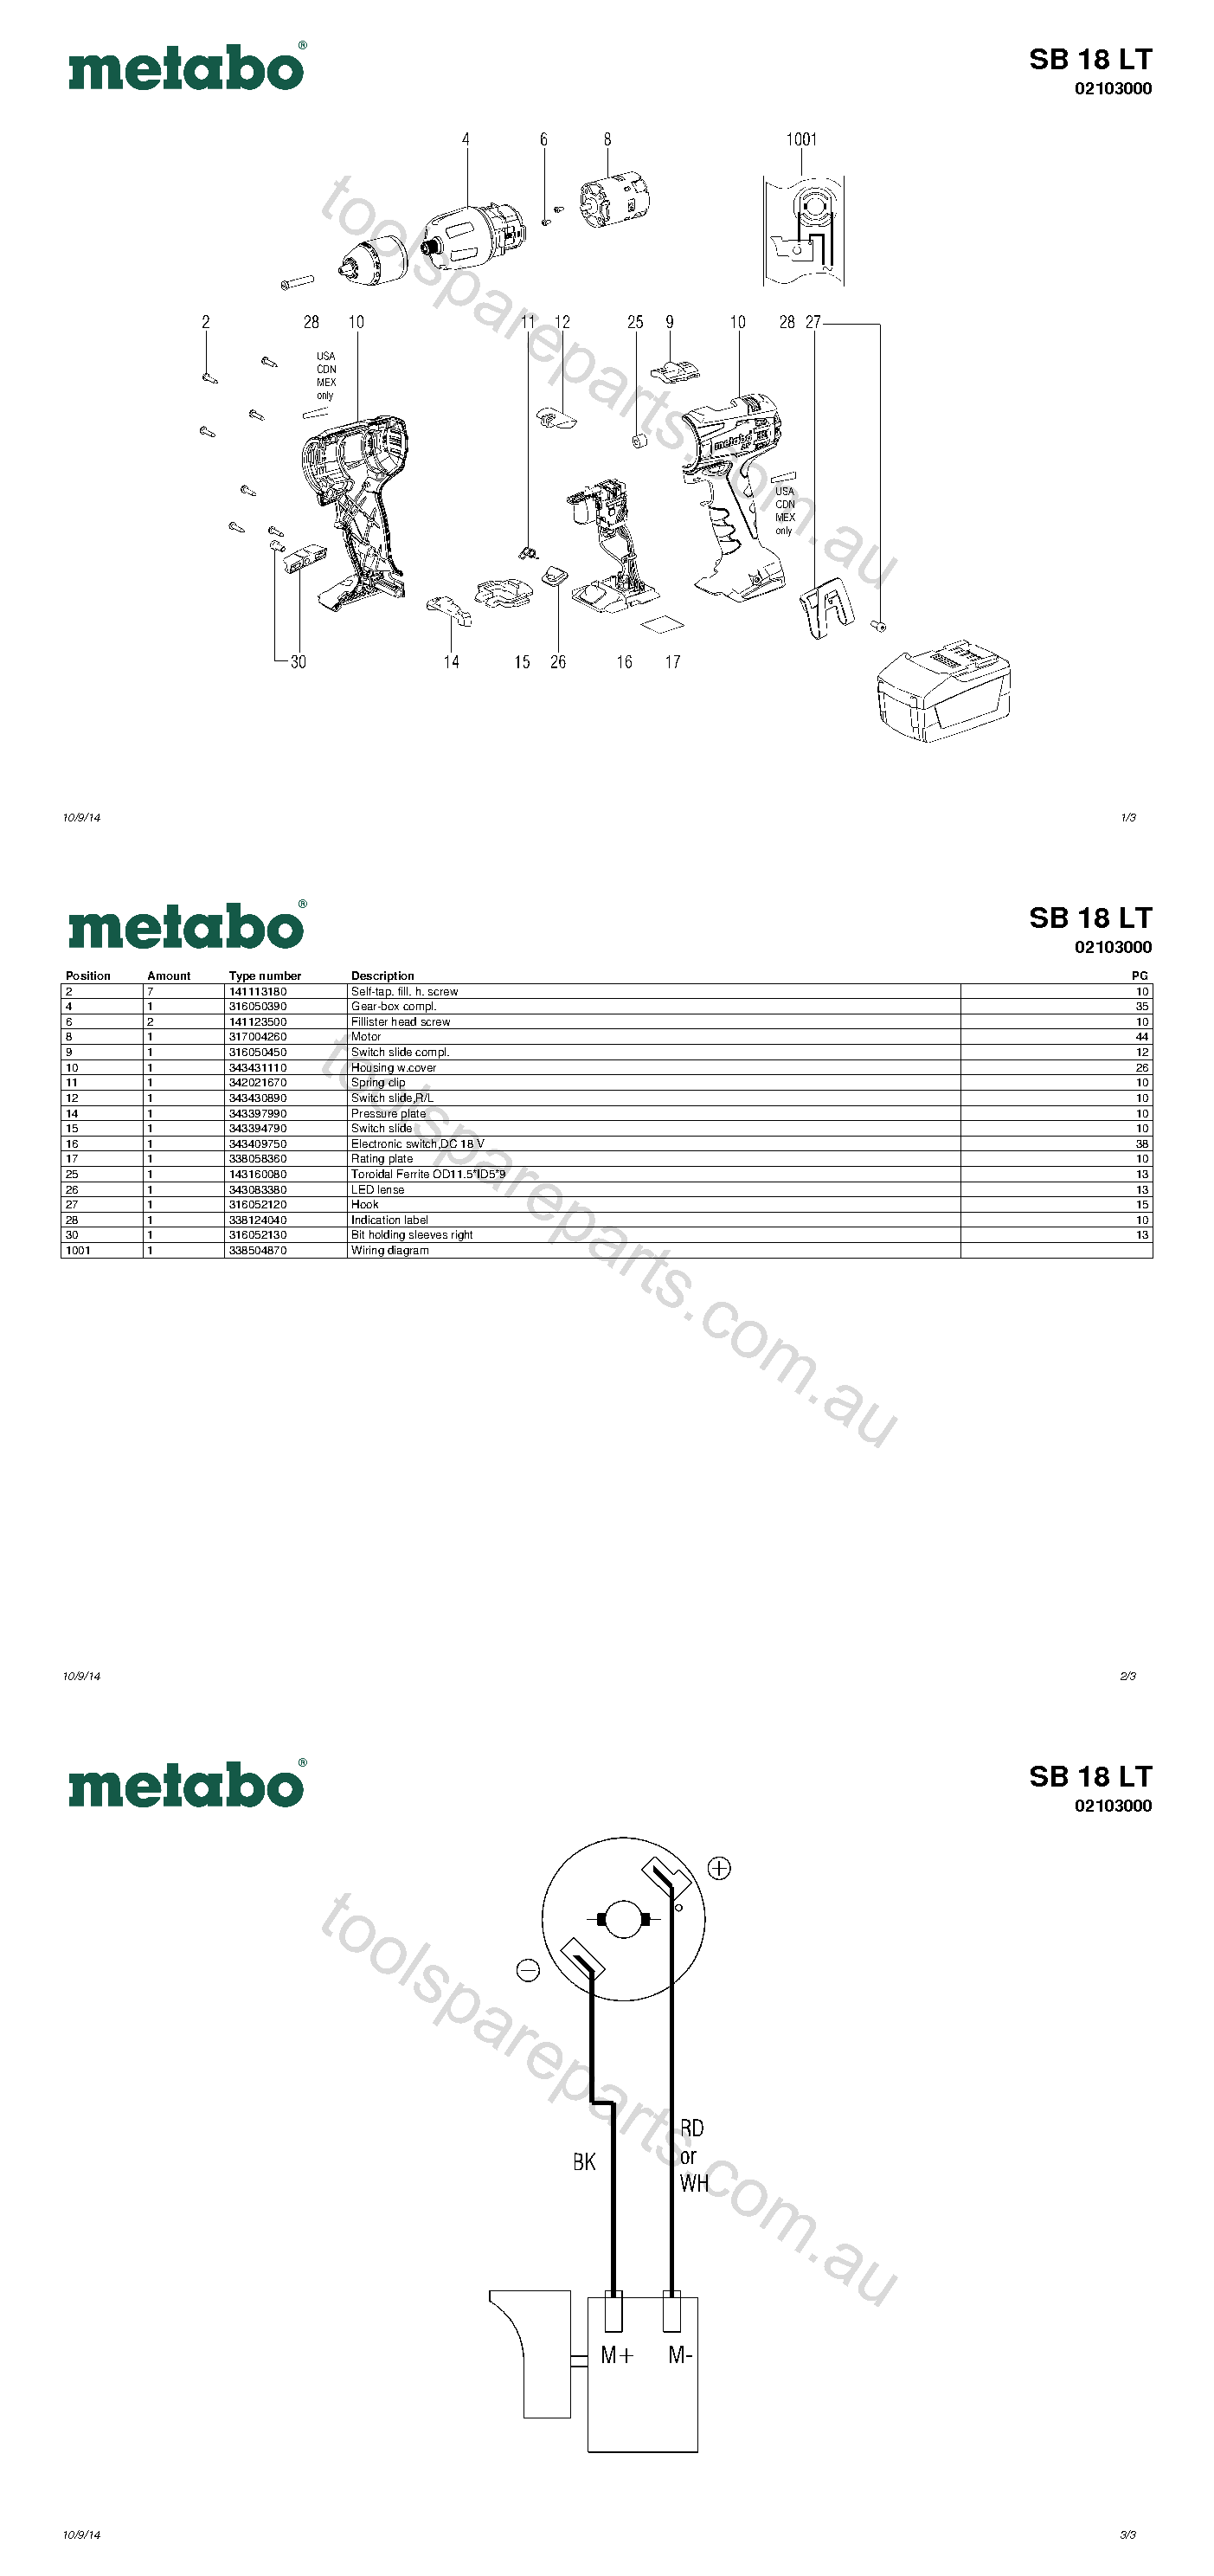 Metabo SB 18 LT 02103000  Diagram 1